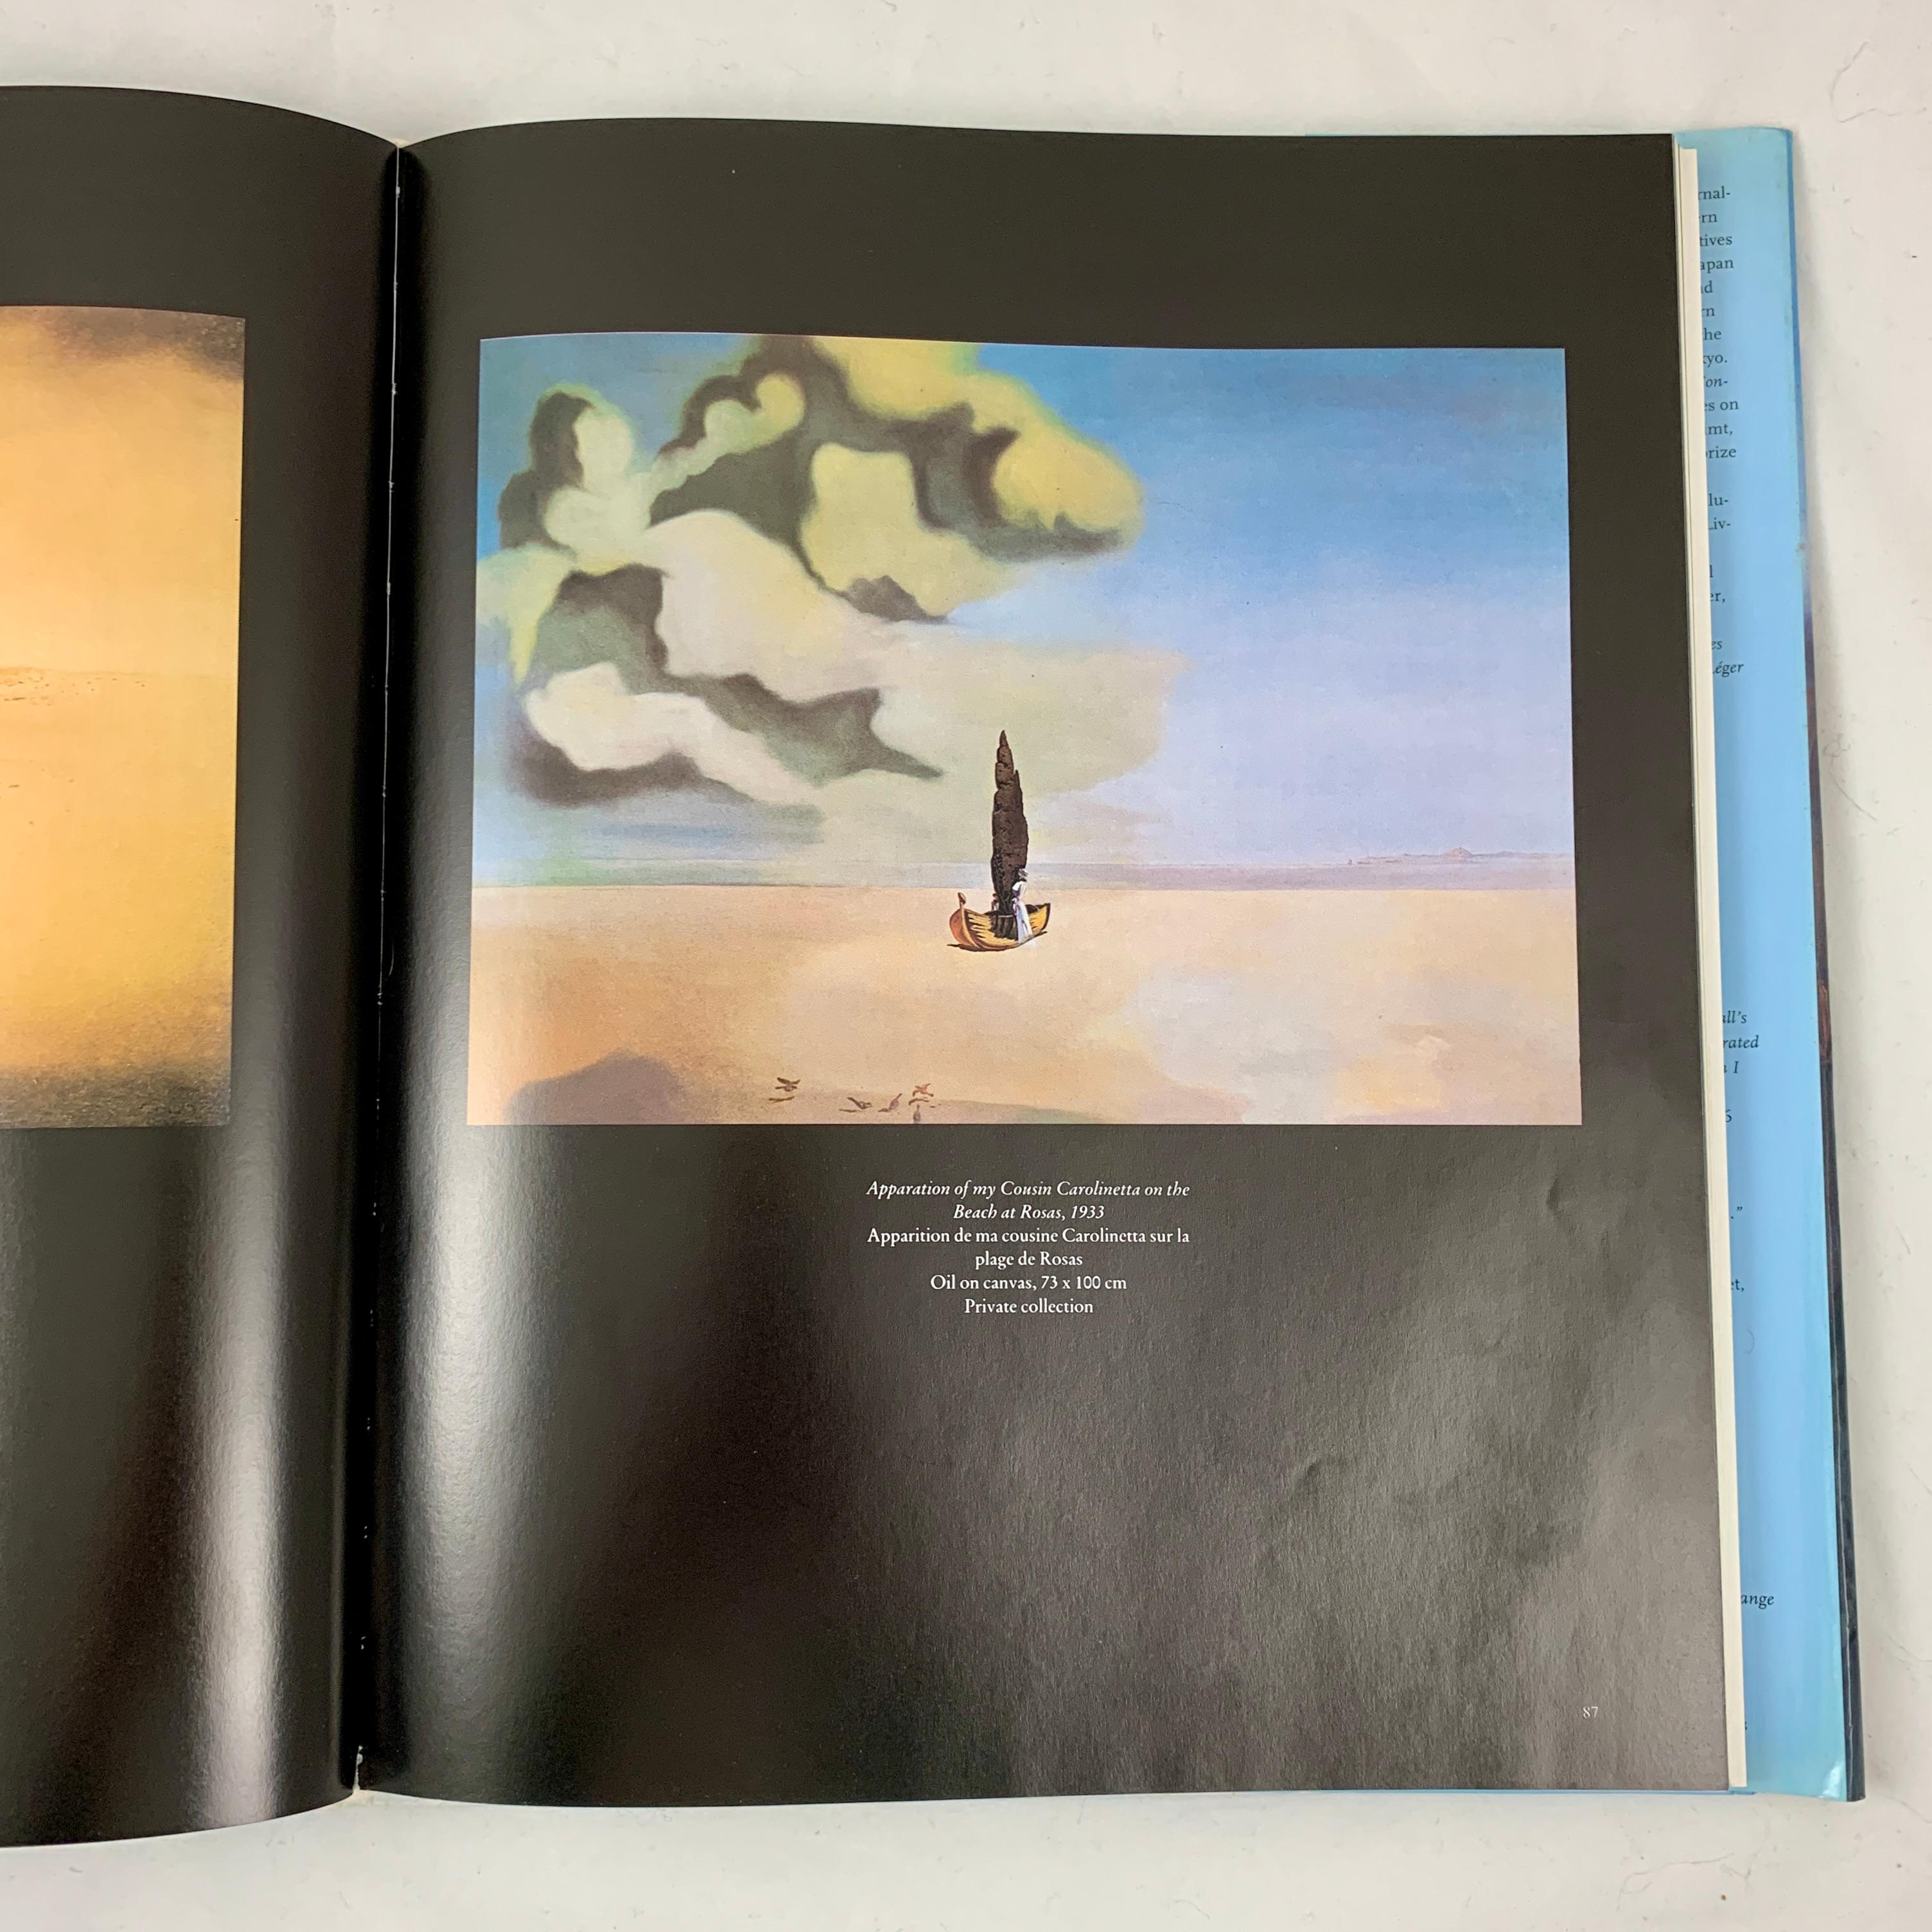 German Salvador Dalí Art Book by Robert Descharnes and Gilles Néret, Taschen Press For Sale